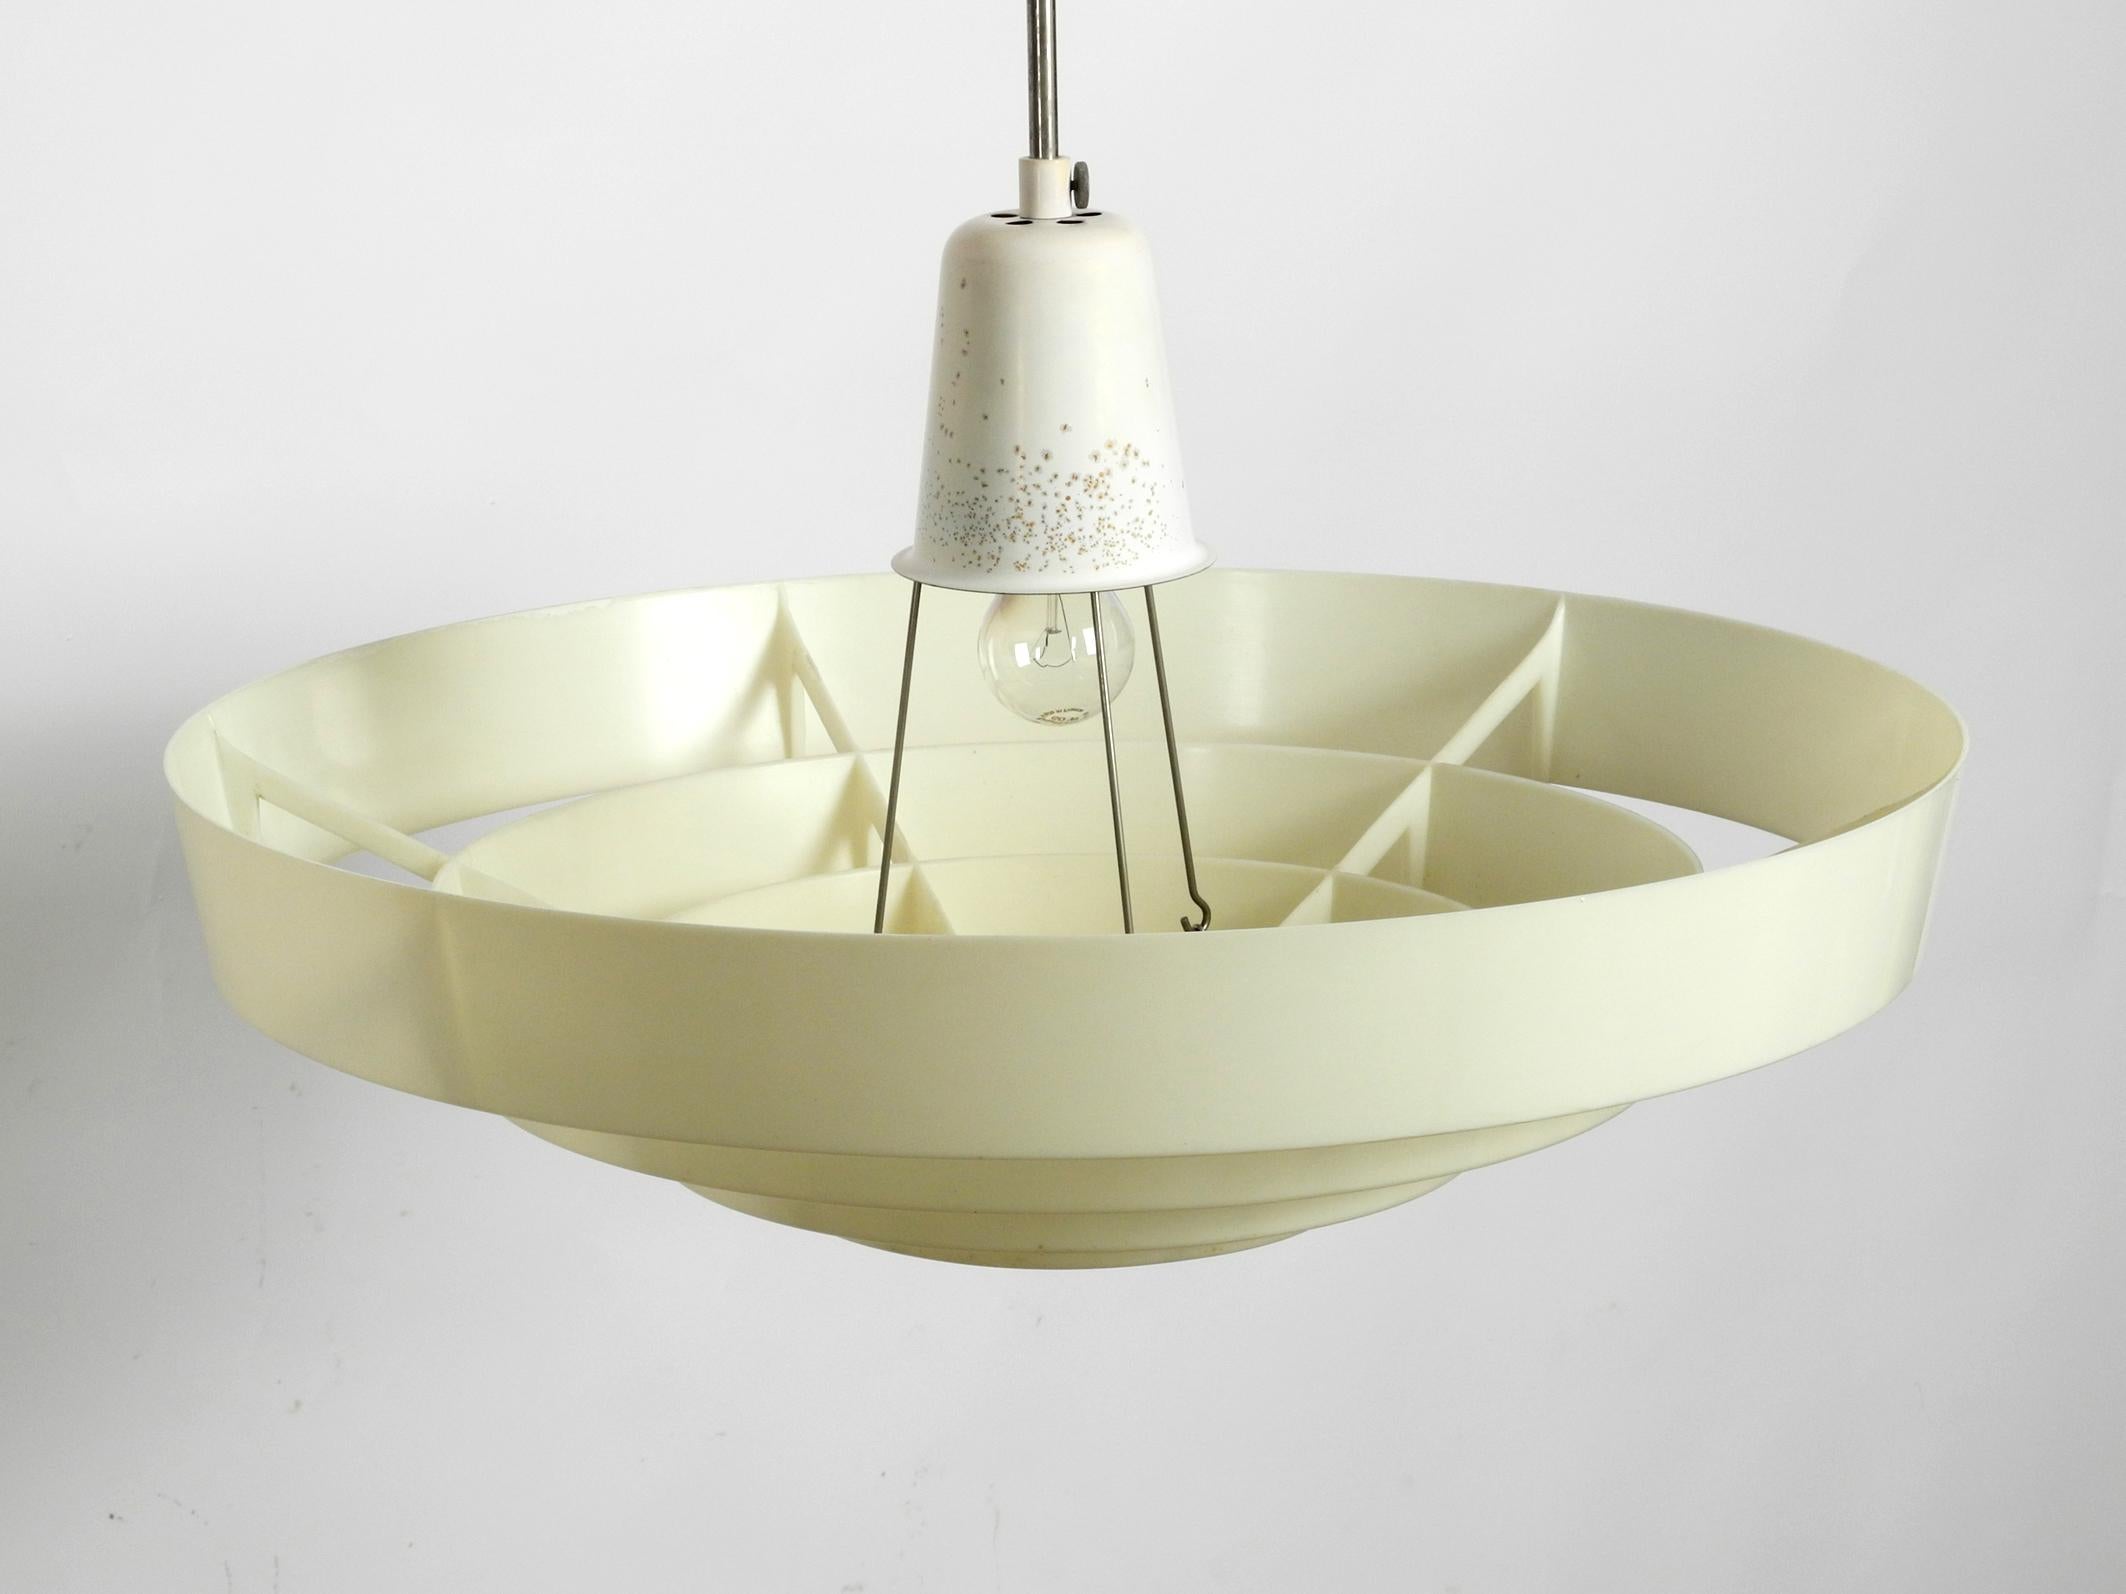 XXL Art Deco Modernist industrial slat ceiling lamp from Siemens & Schuckert In Good Condition For Sale In München, DE